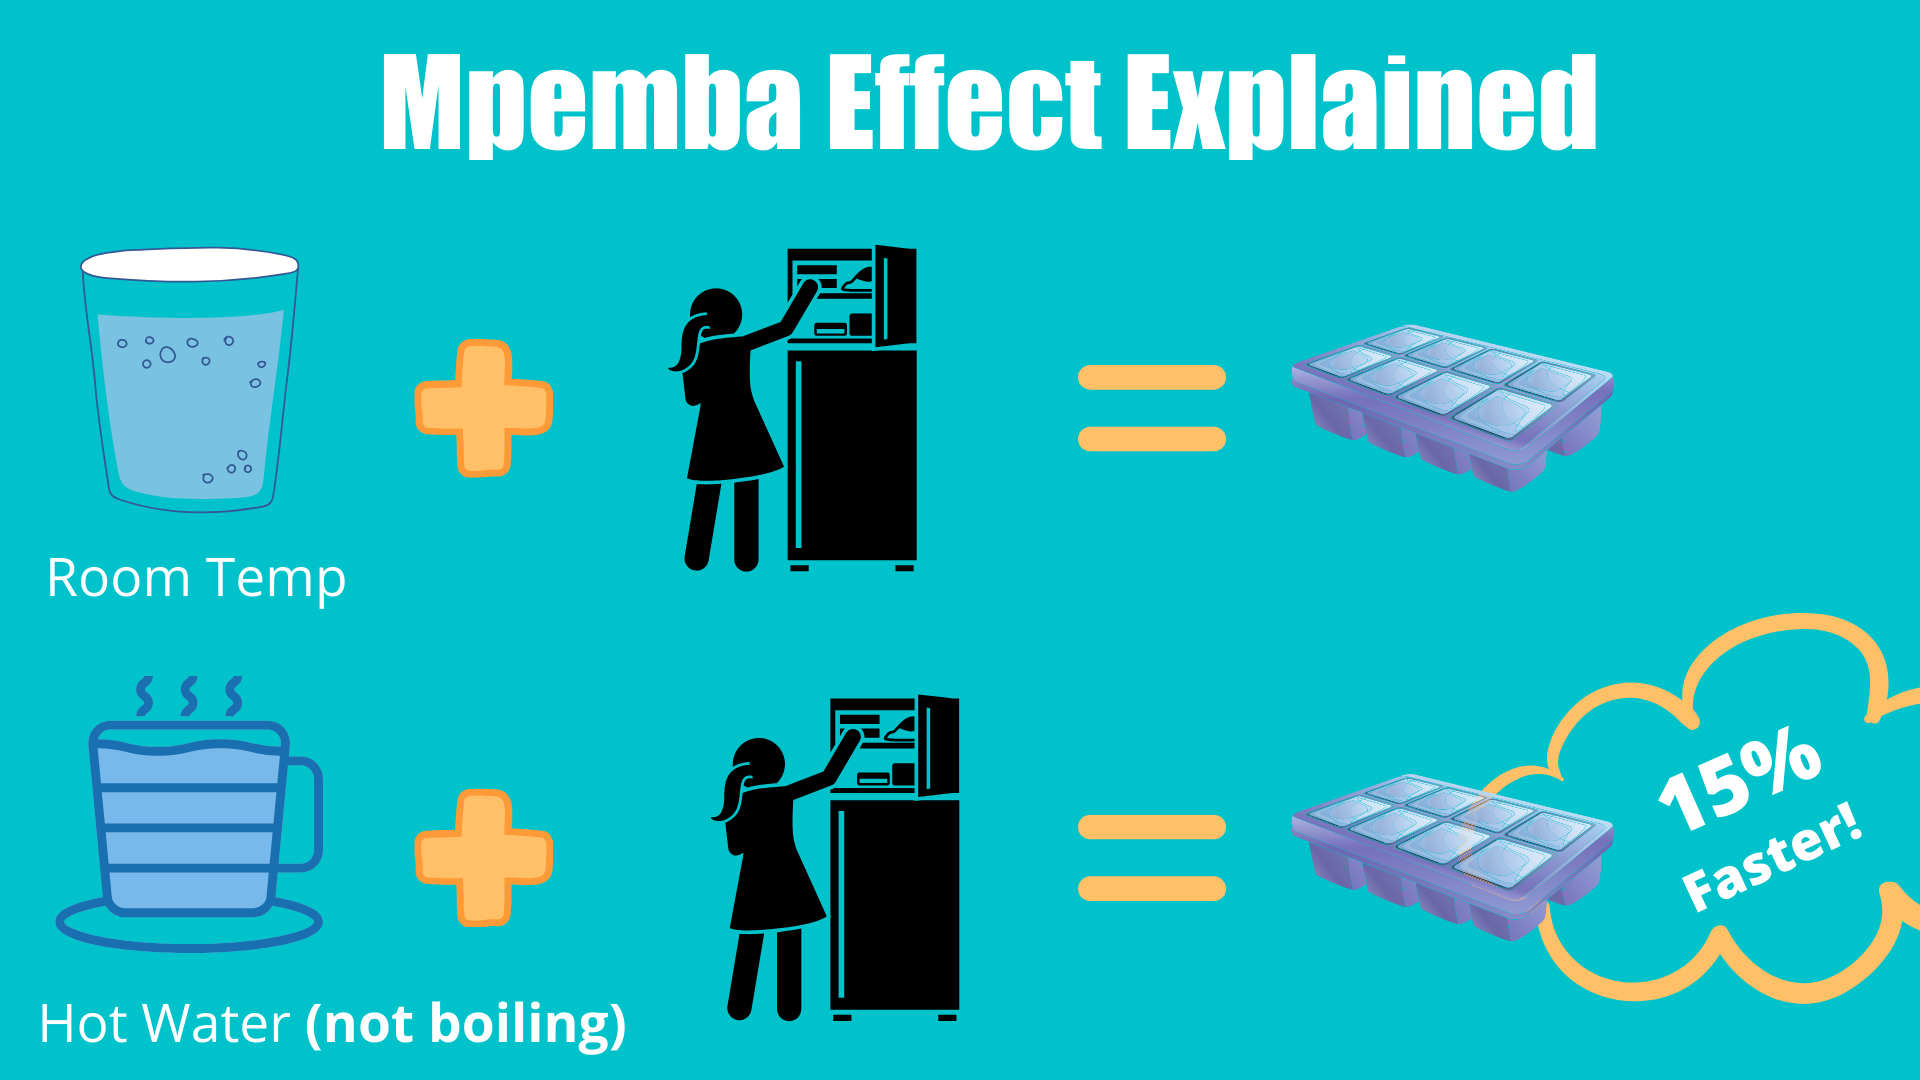 Mpemba Effect Explained